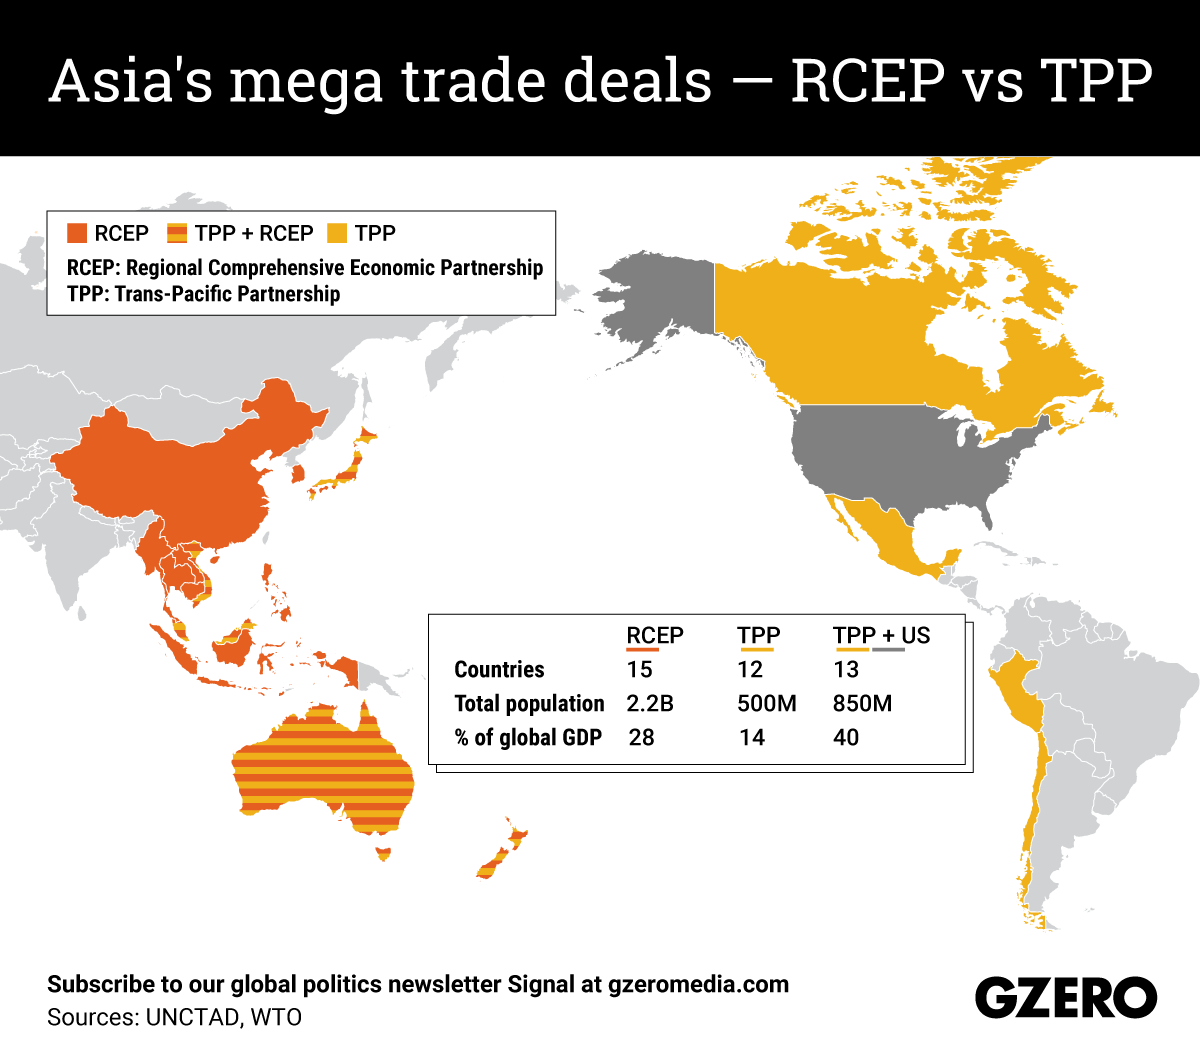 The Graphic Truth: Asia's mega trade deals — RCEP vs TPP